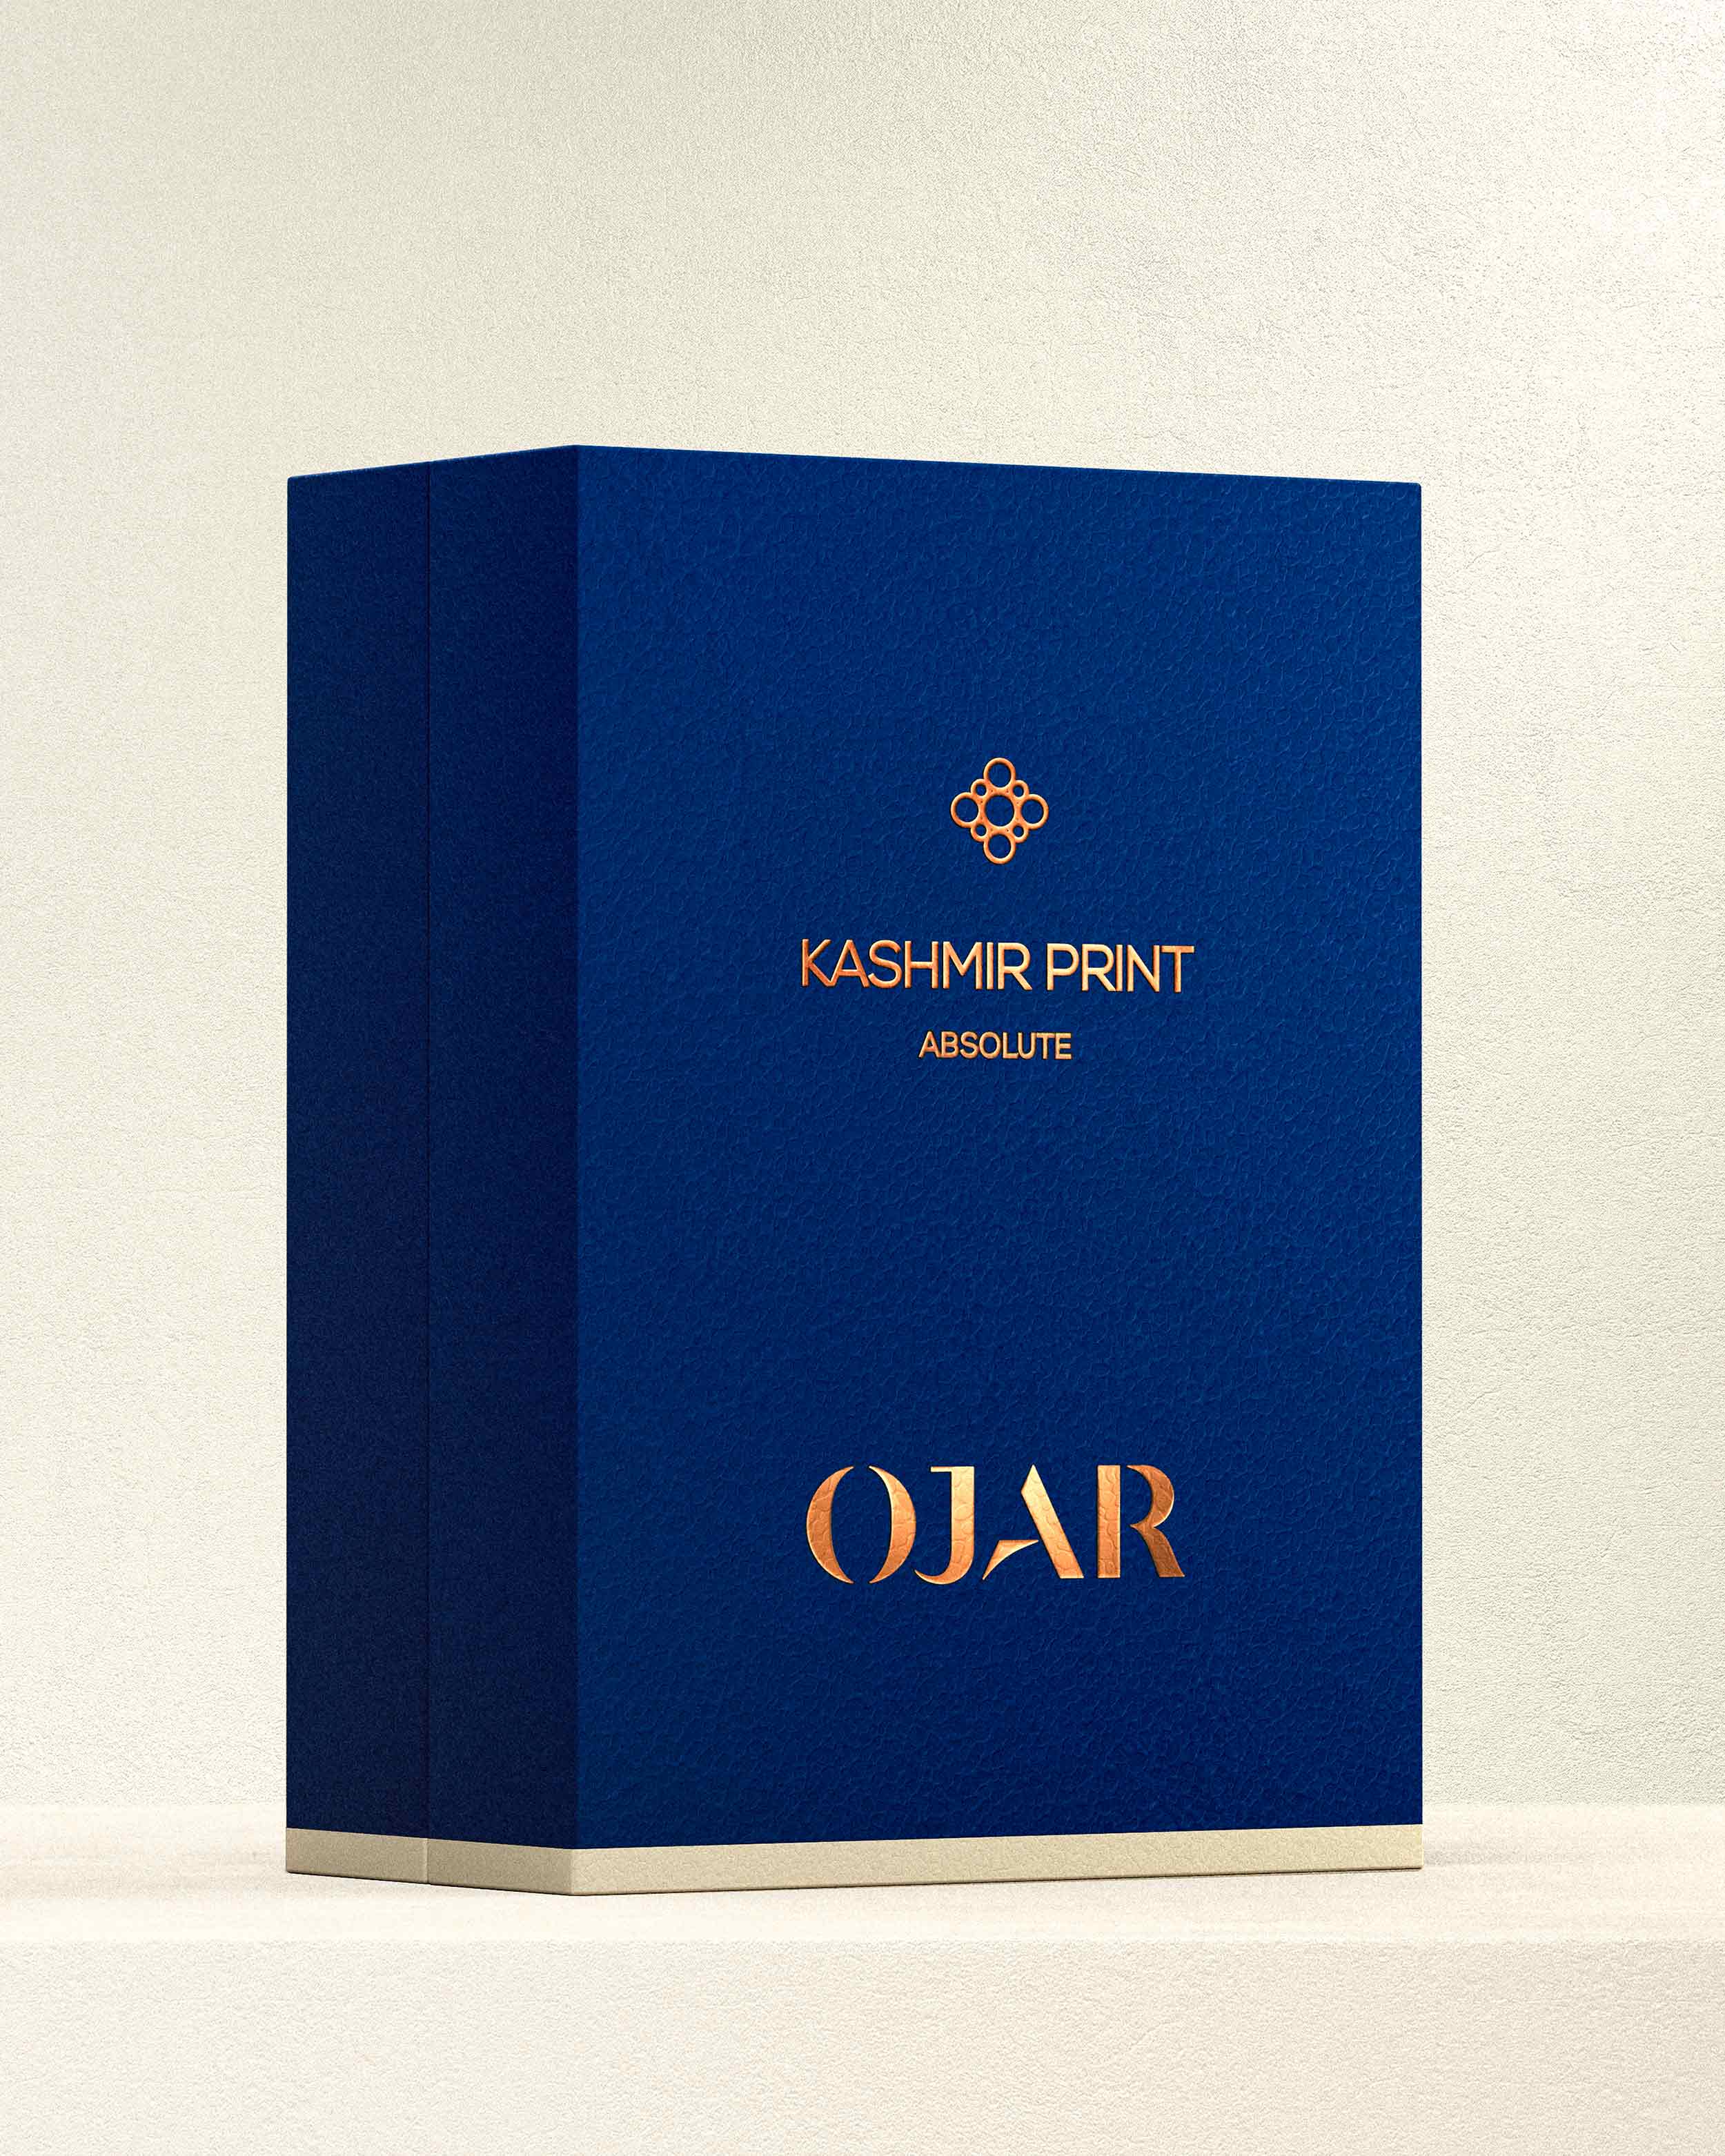 OJAR Absolute Kashmir Print Perfume Pack